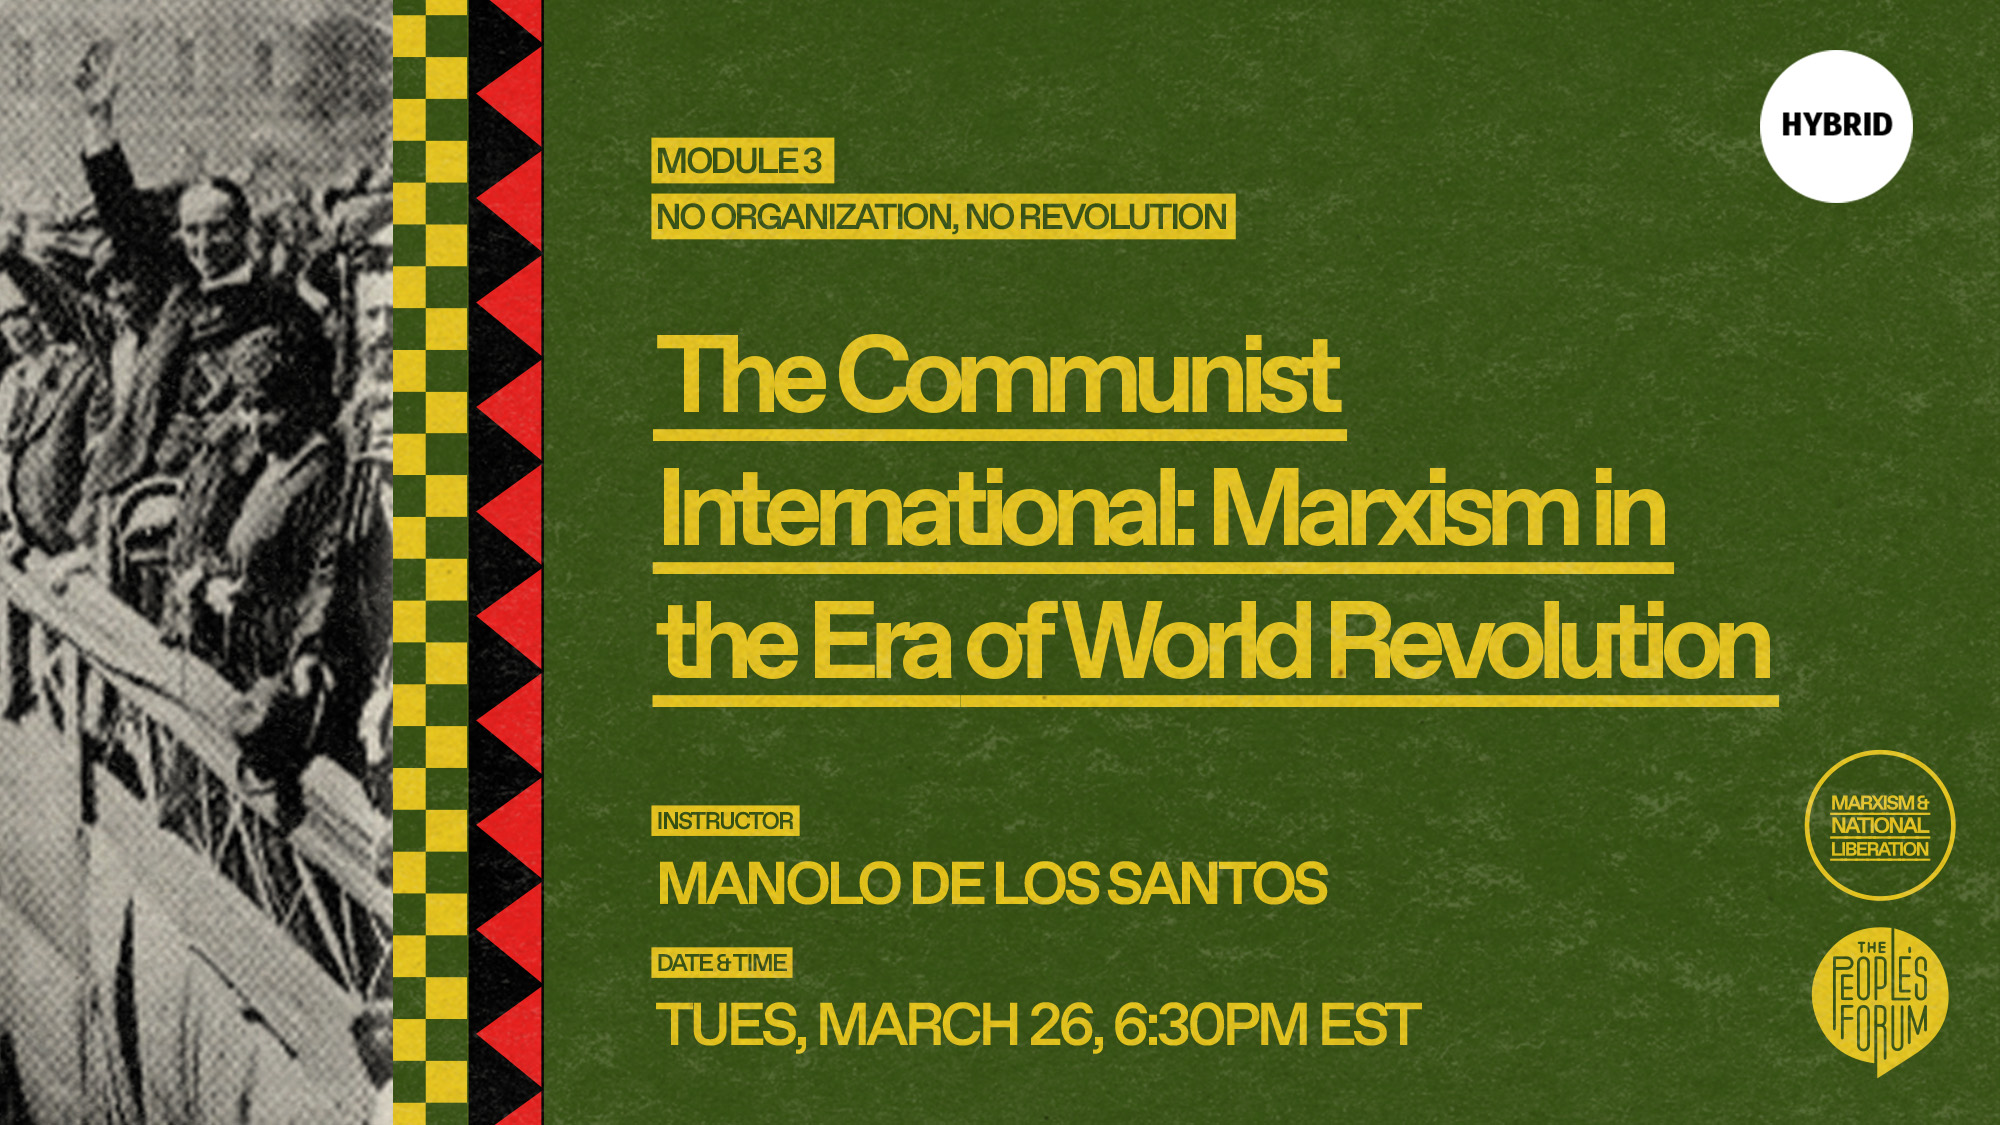 A green banner that reads: "The Communist International: Marxism in the Era of World Revolution"